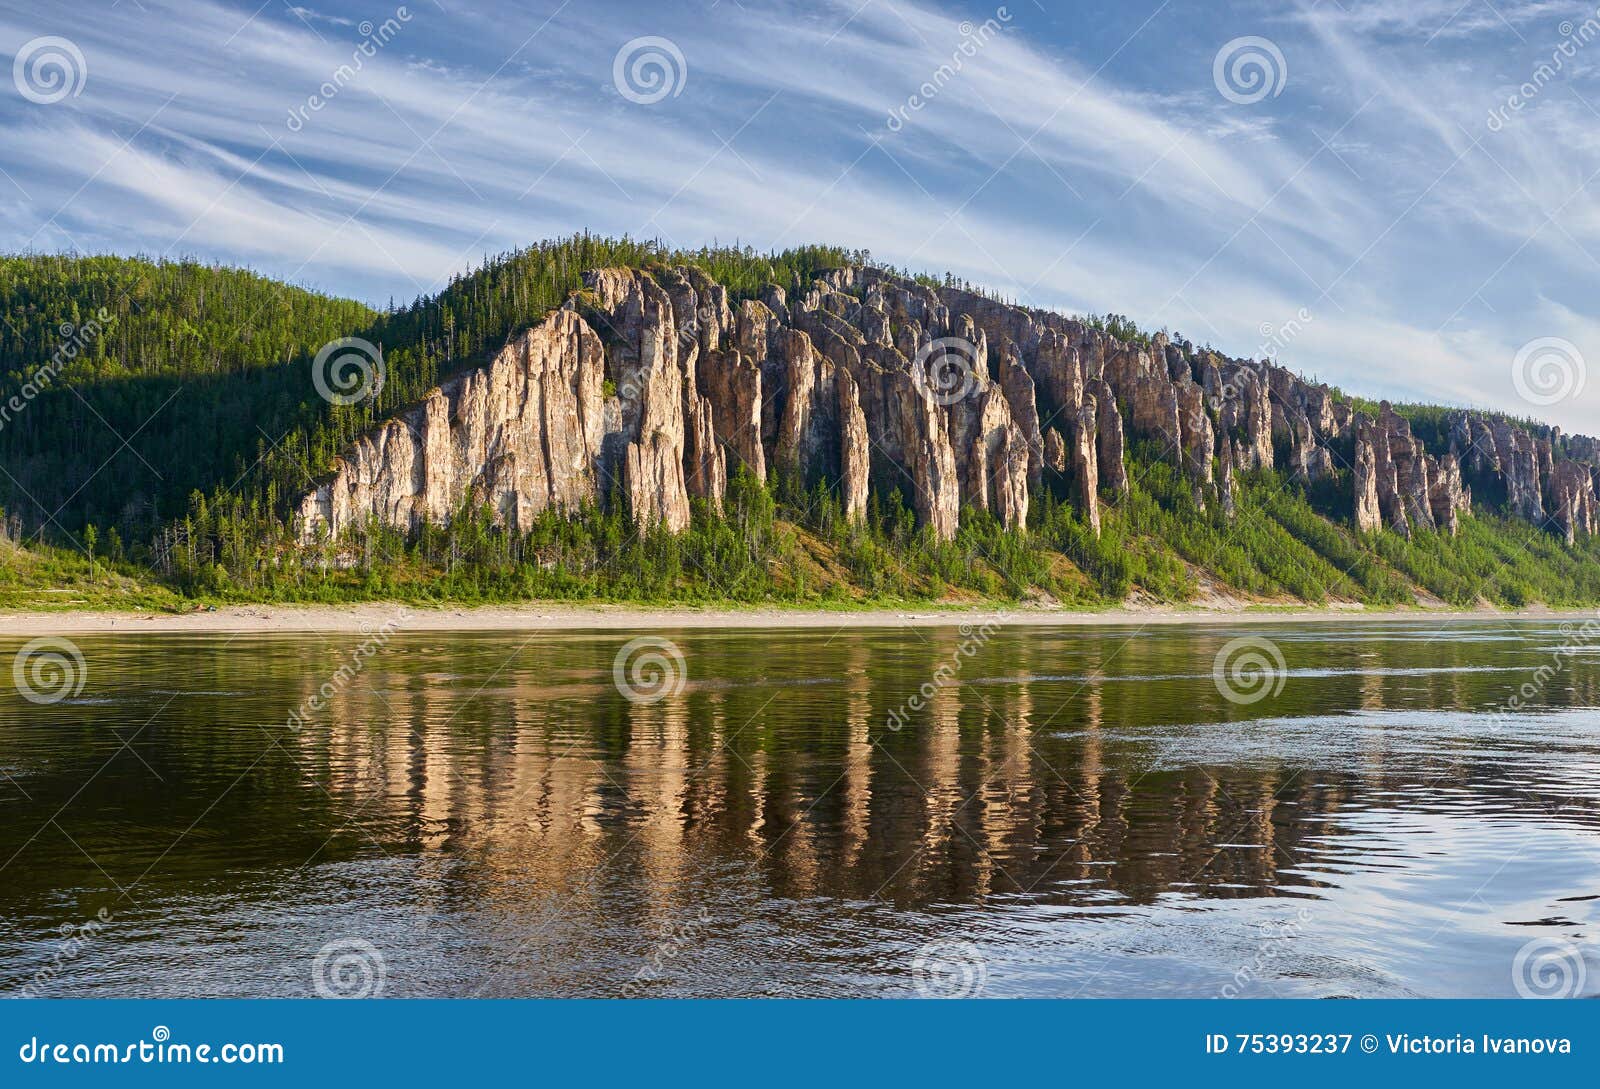 lena pillars, bank of lena river, yakutia